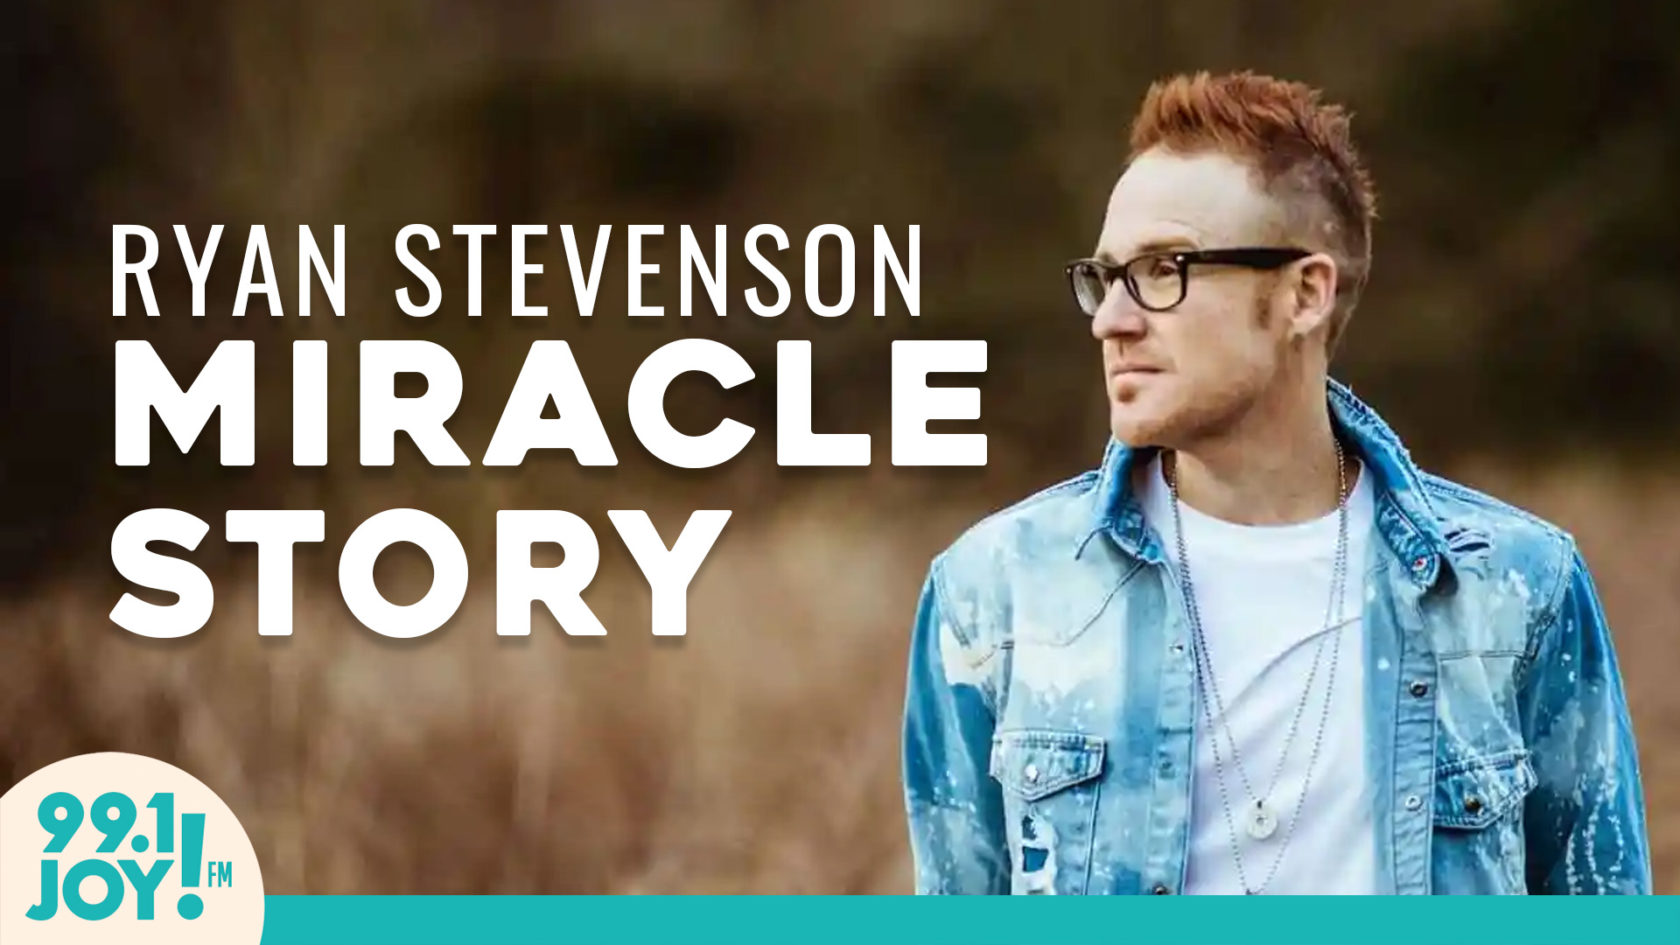 Near-death experience launched Ryan Stevenson's music career